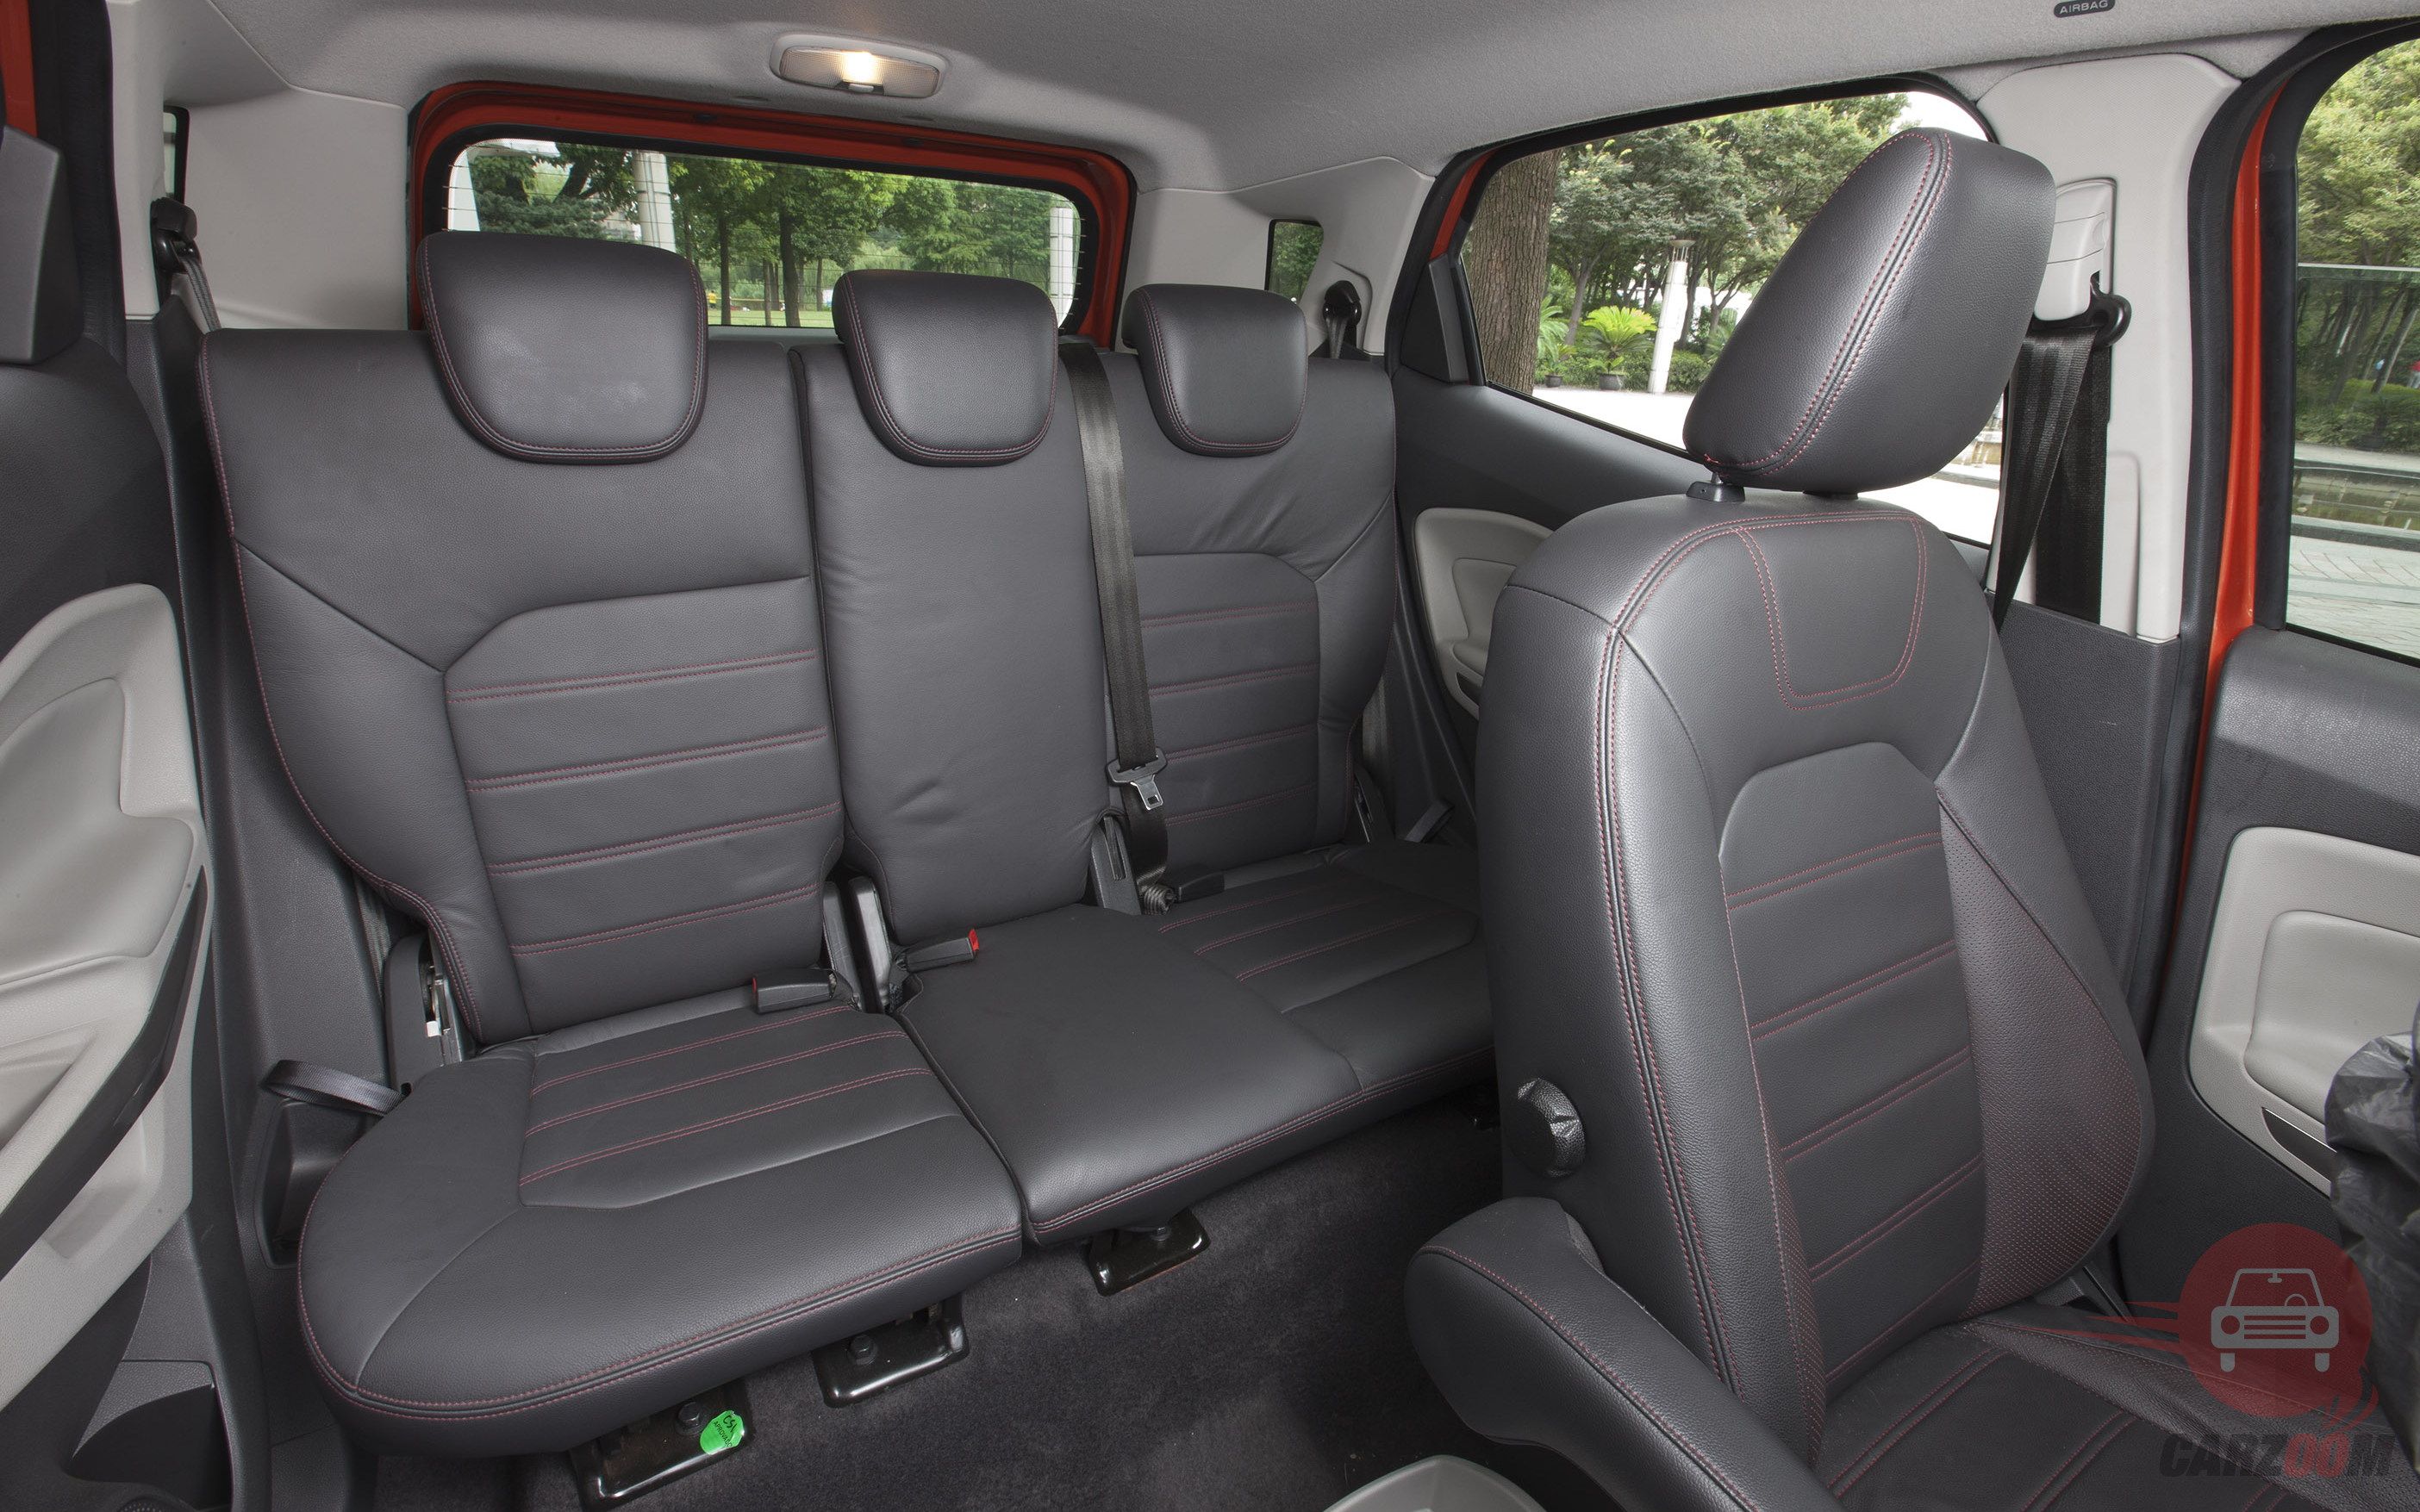 Ford-EcoSport-Interiors-Seats